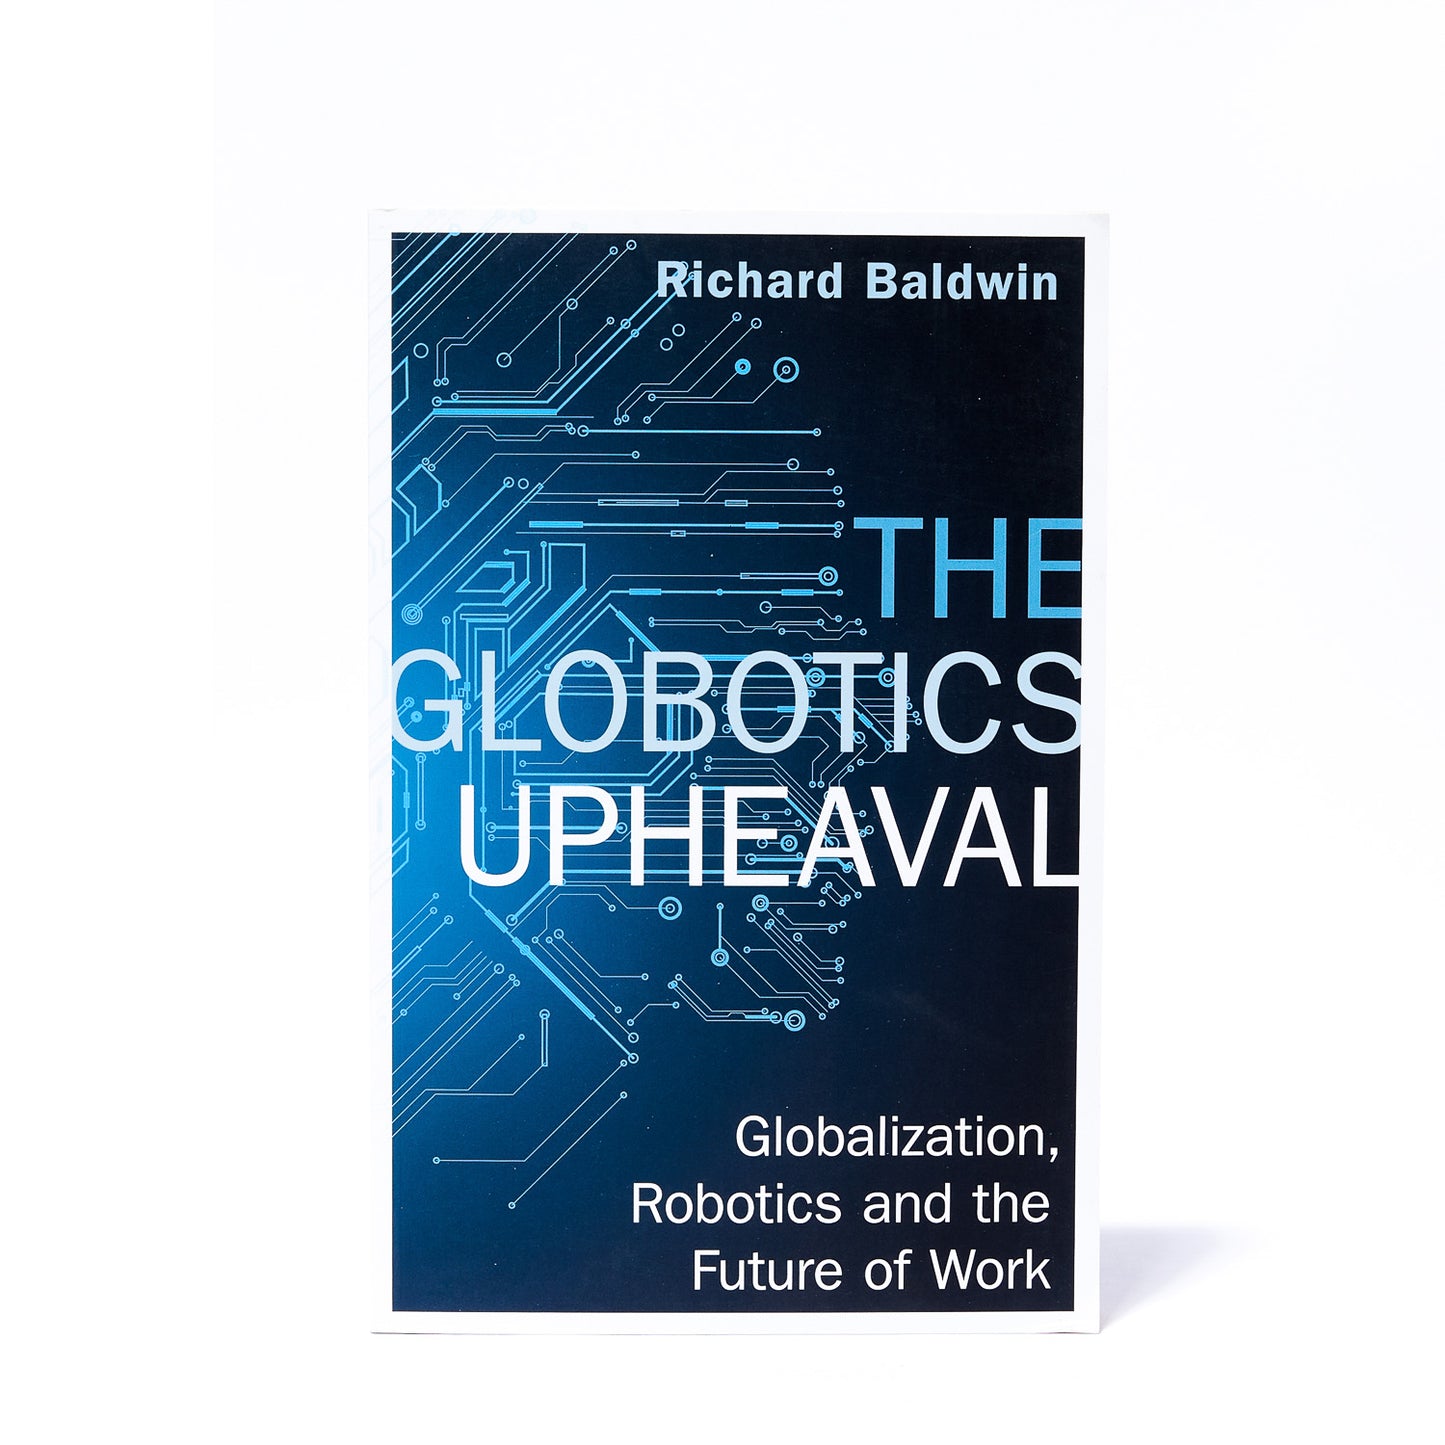 GLOBOTICS UPHEAVAL: GLOBALISATION, ROBOTICS AND THE FUTURE OF WORK